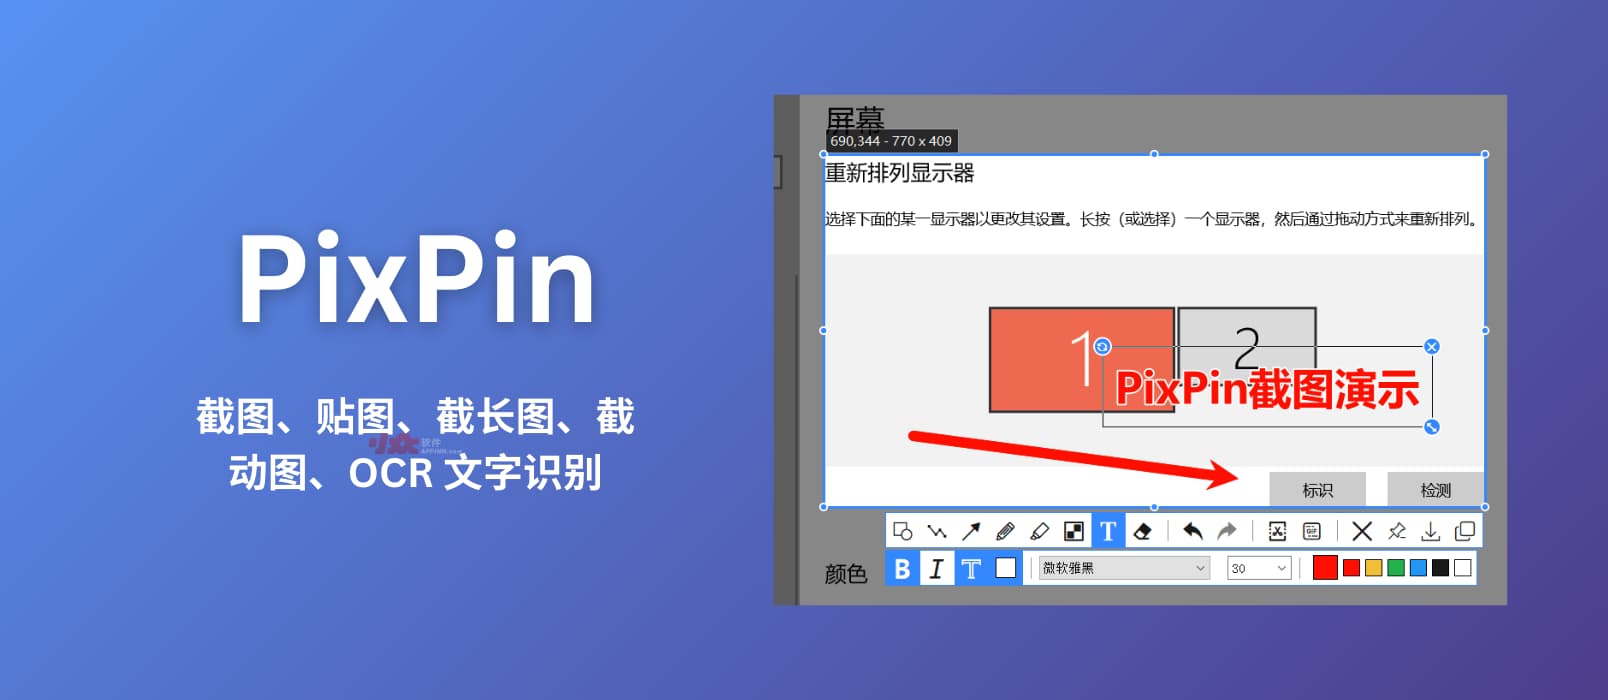 PixPin - 新截图工具：贴图、截长图、截动图、OCR 文字识别[Windows]